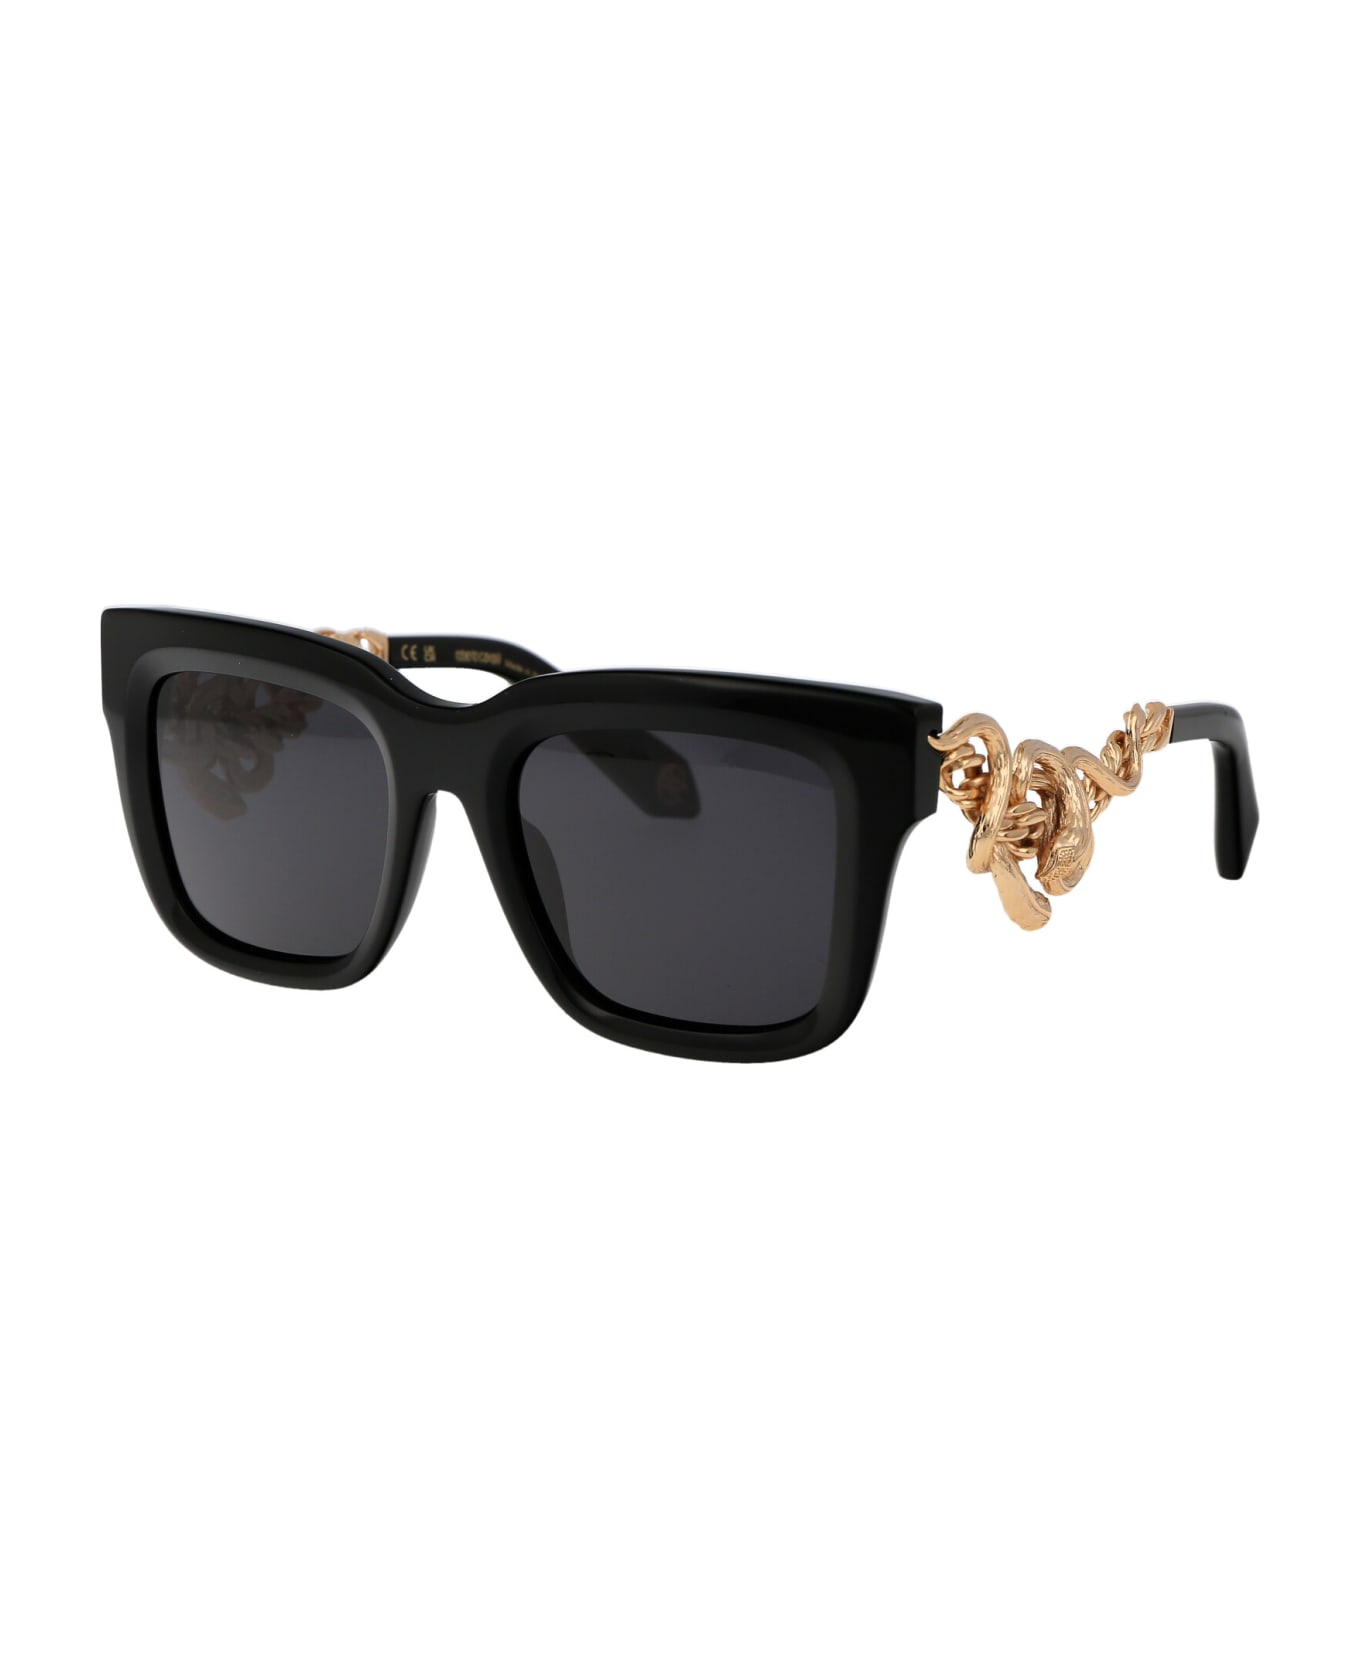 Roberto Cavalli Src041m Sunglasses - 0700 BLACK